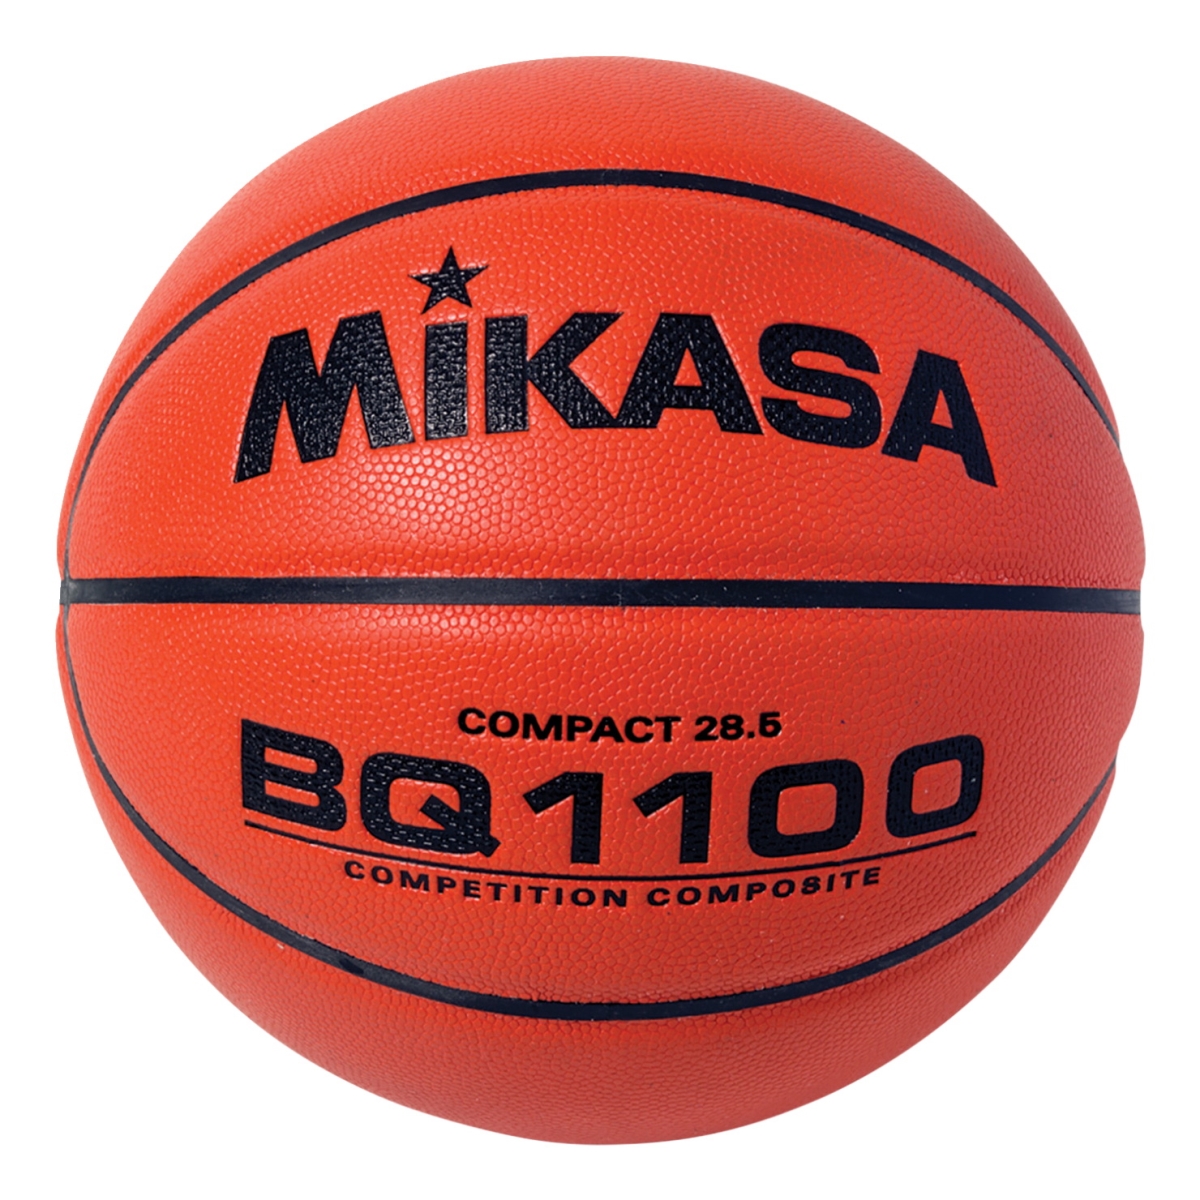 Mikasa 2019890 28.5 in. Composite Covered Basketball, Orange